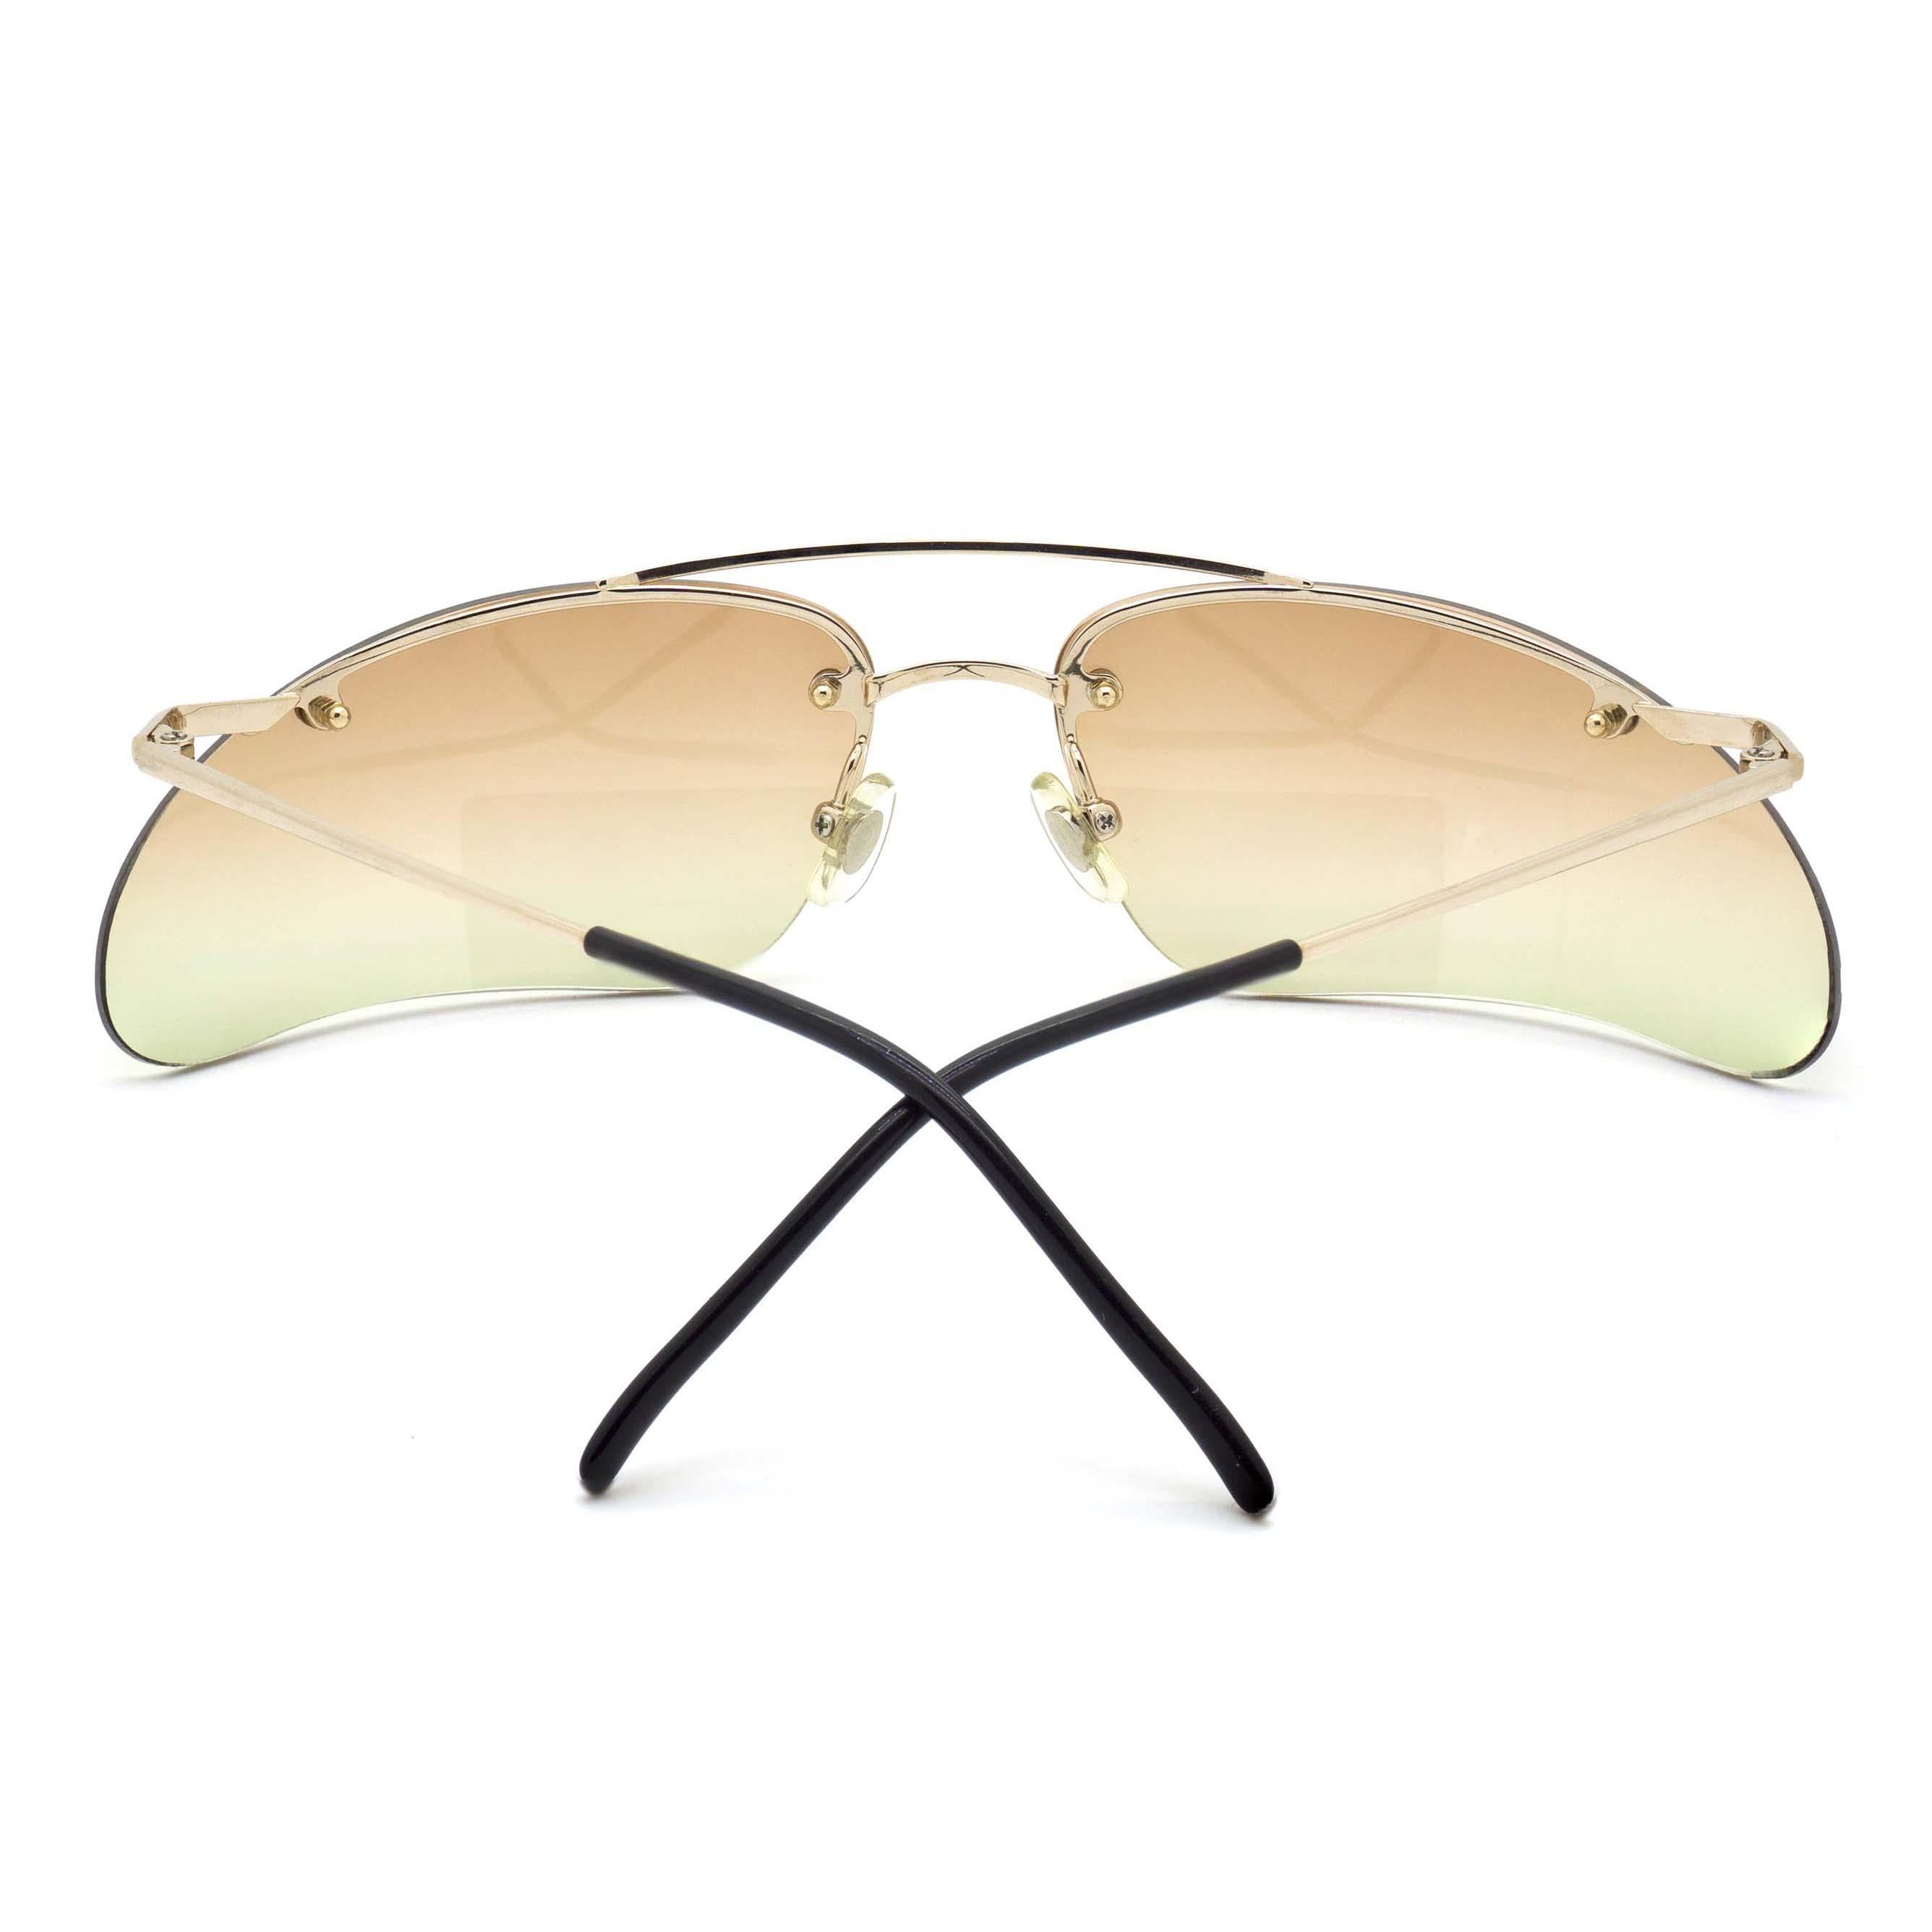 Alexander McQueen titanium 1990s sunglasses In New Condition For Sale In Santa Clarita, CA